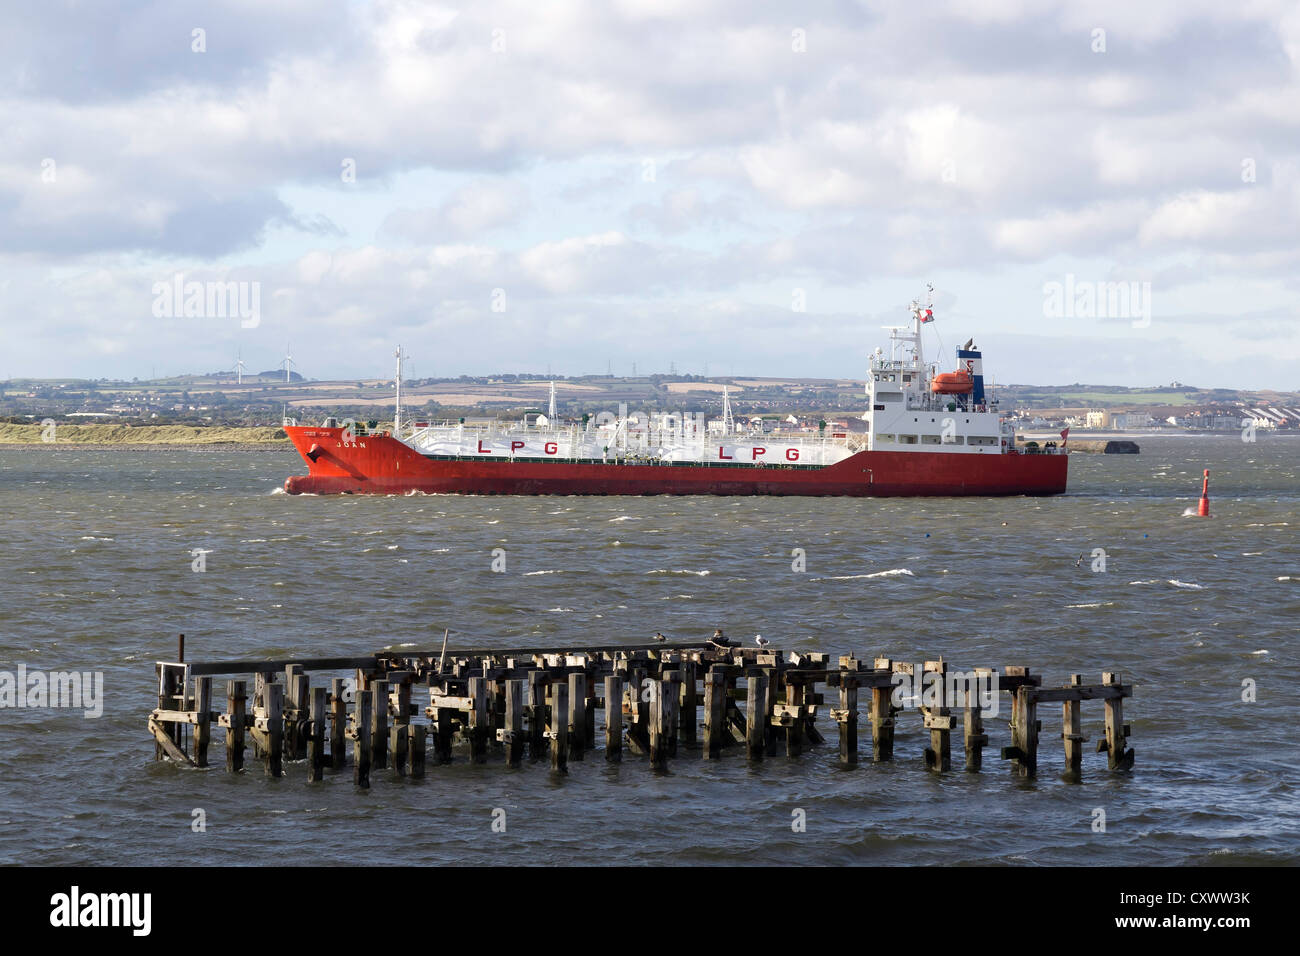 LPG Gas Carrier Schiff JOAN IMO:9448877 angekommen, um am Teesport Phillips Ölraffinerie Oktober 2012 laden Stockfoto